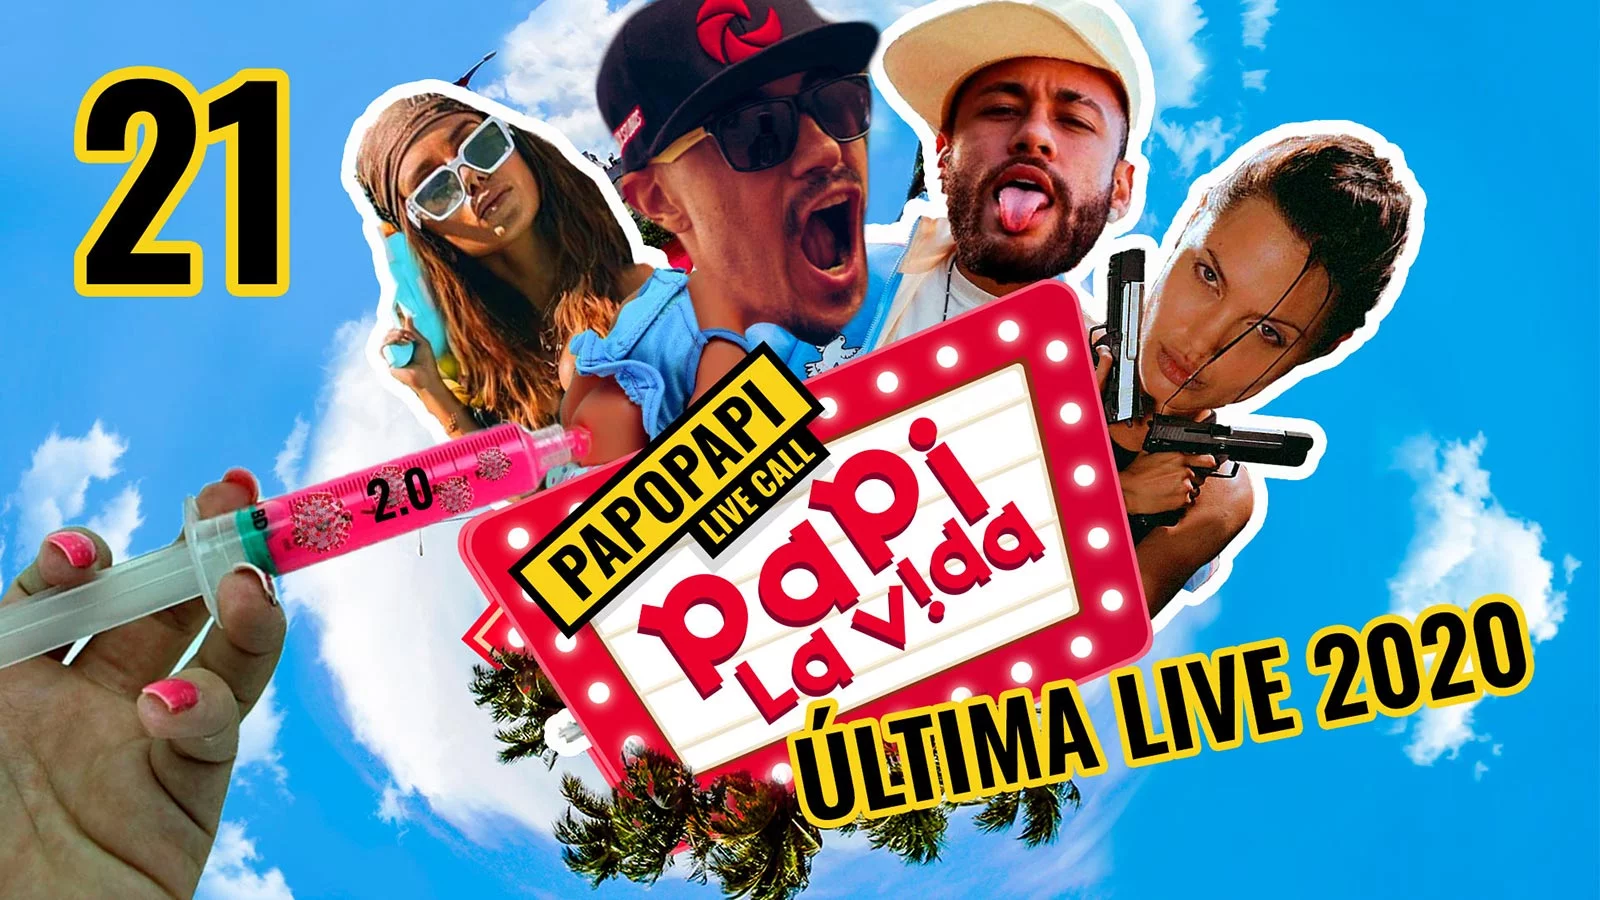 Ultima Live 2020: Vacina, Neymar, Anitta, Femicidio e Alienigenas